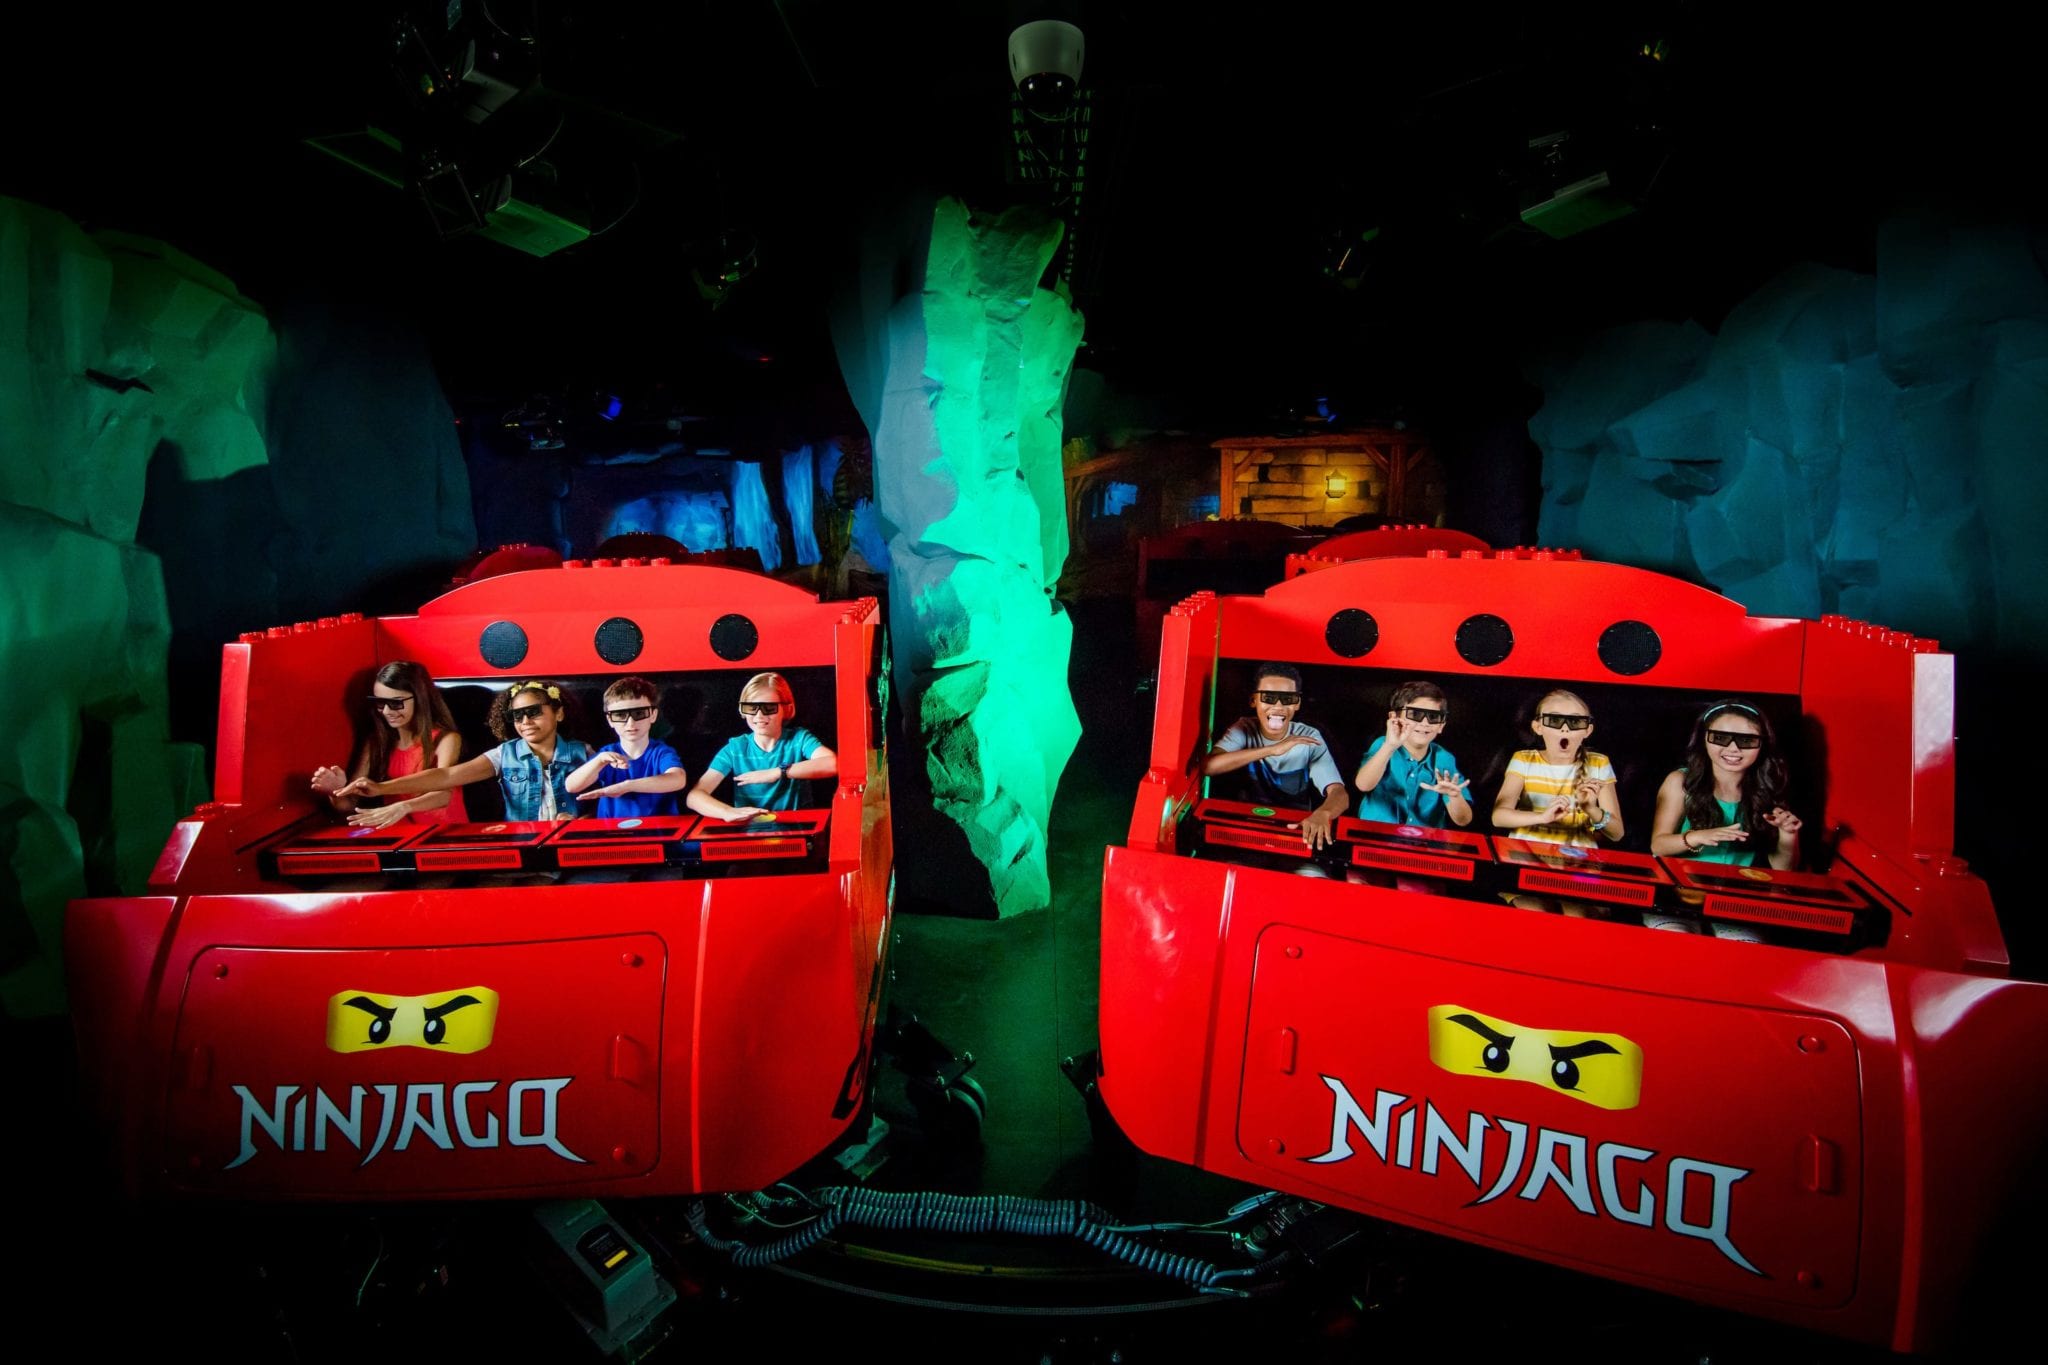 Lego Ninjago World officially opens at Legoland Florida Resort2048 x 1365